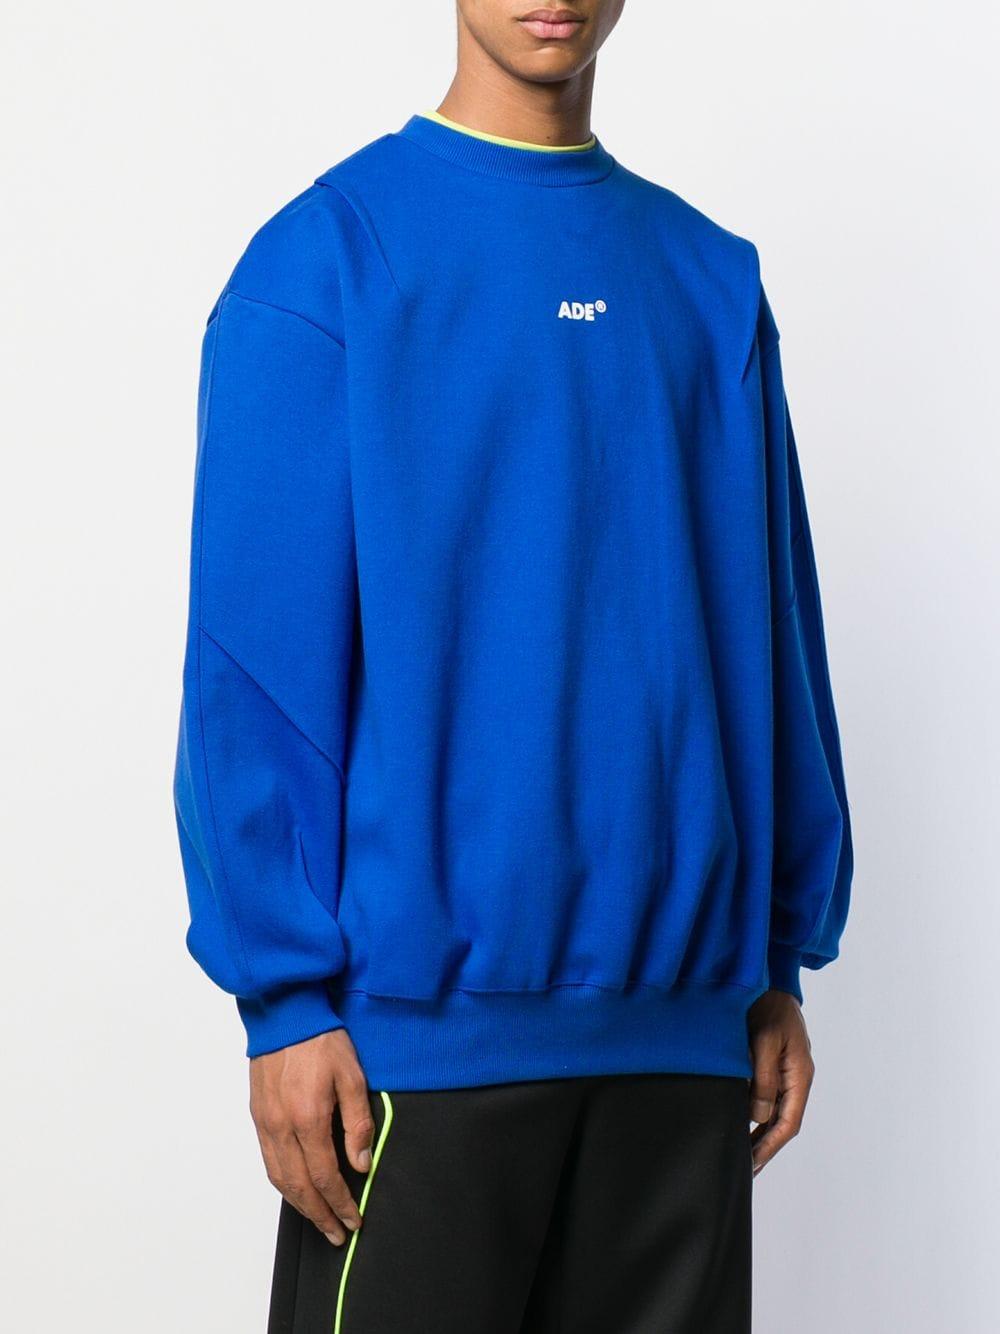 ADER error Cotton Oversized Sweater in Blue for Men - Lyst